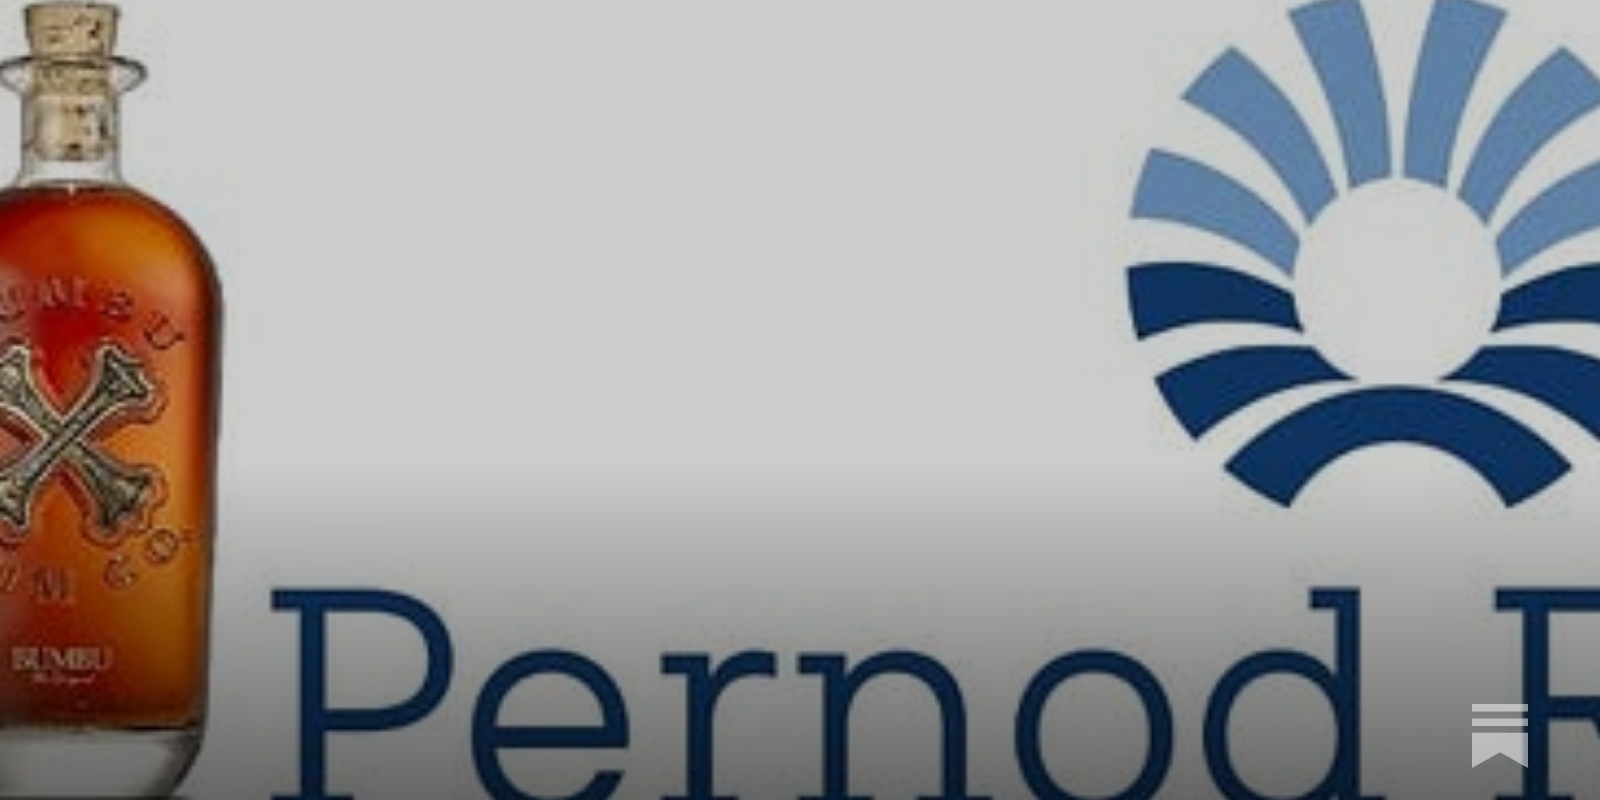 Pernod Ricard to Acquire Bumbu? - by Matt Pietrek